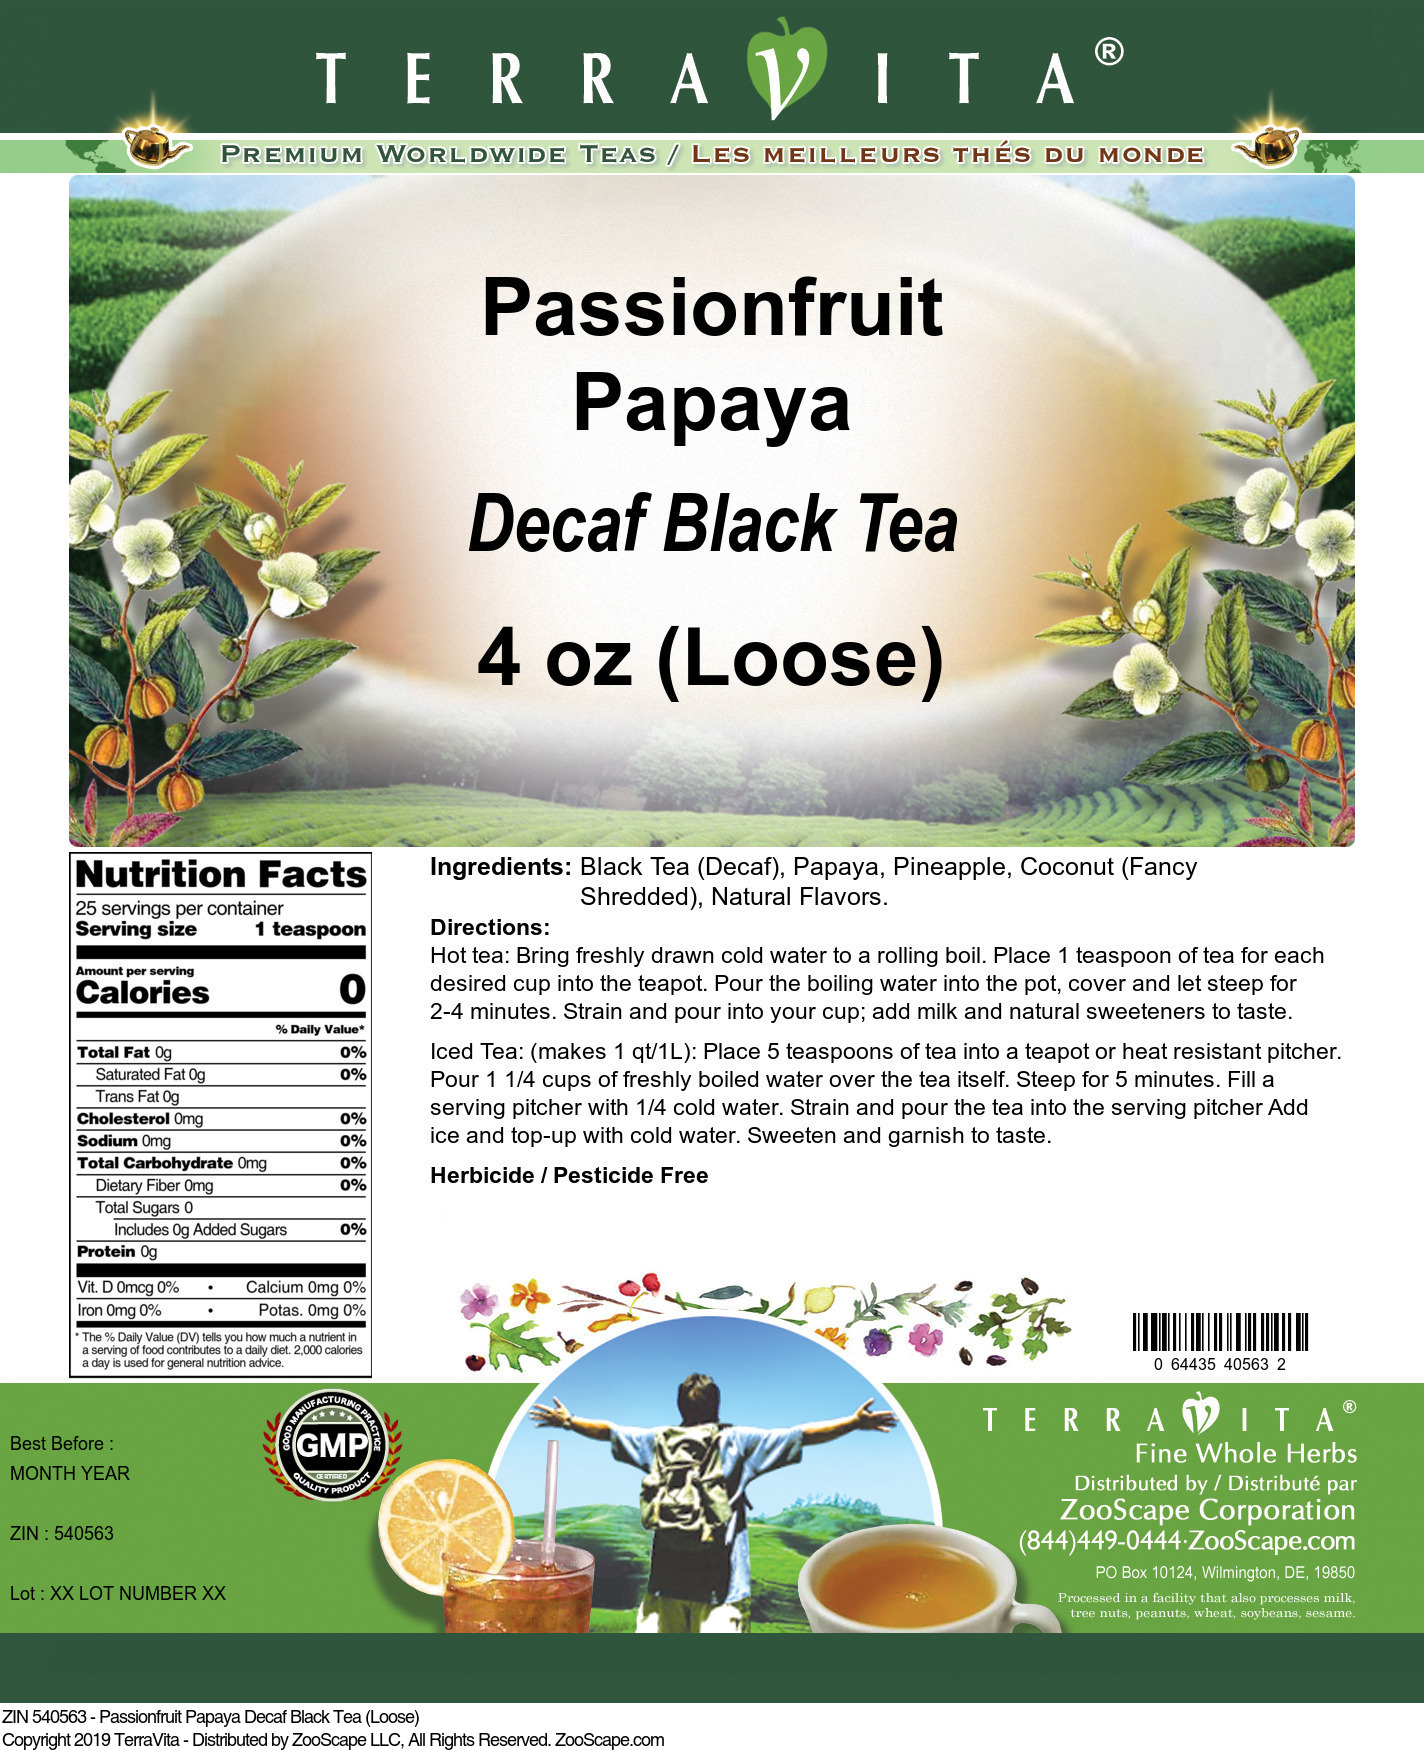 Passionfruit Papaya Decaf Black Tea (Loose) - Label